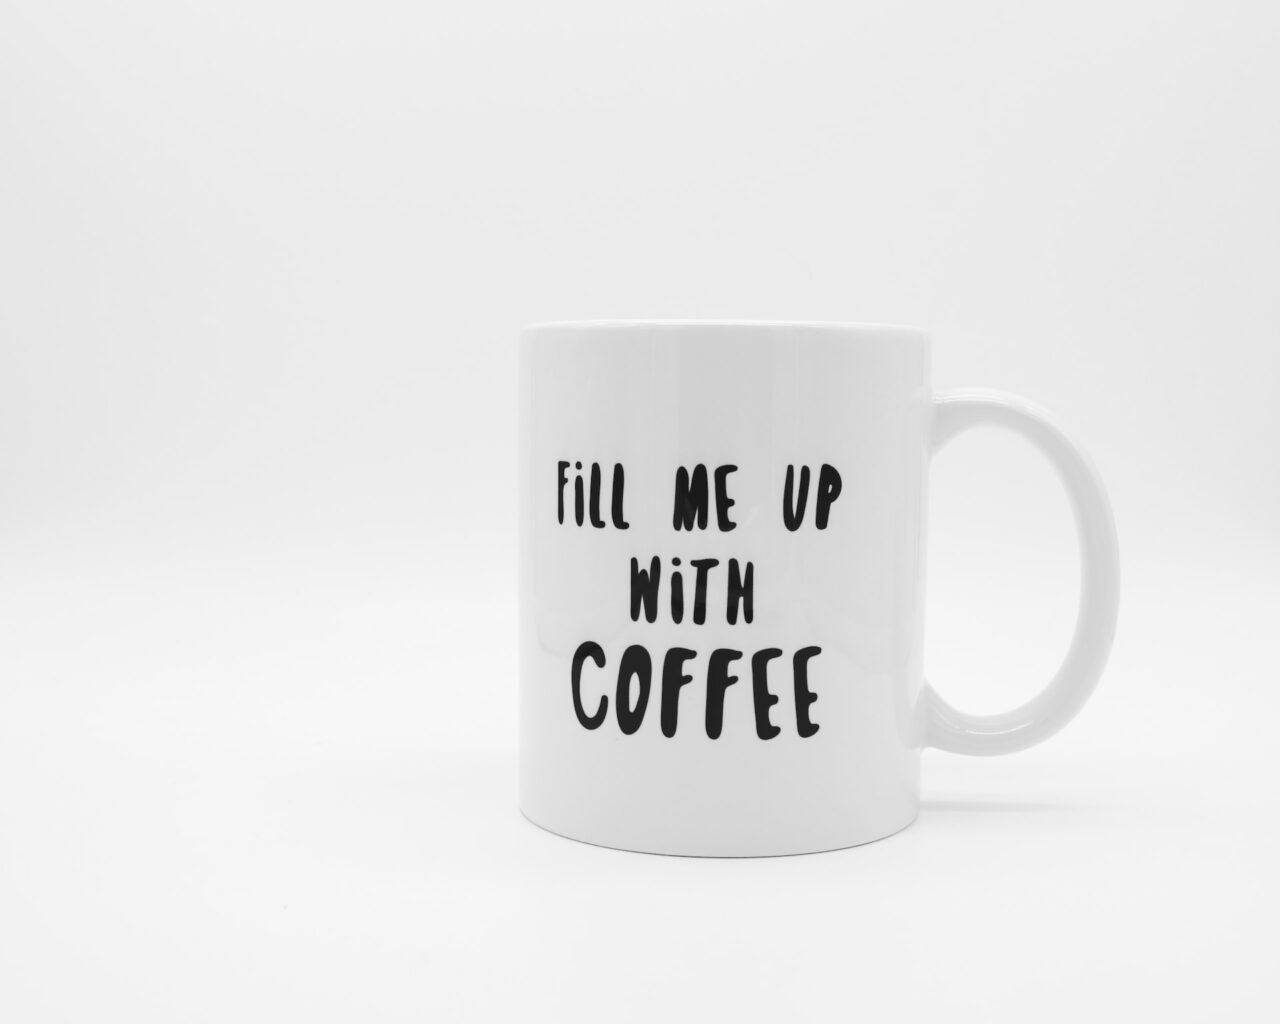 Fill me up with coffee mug